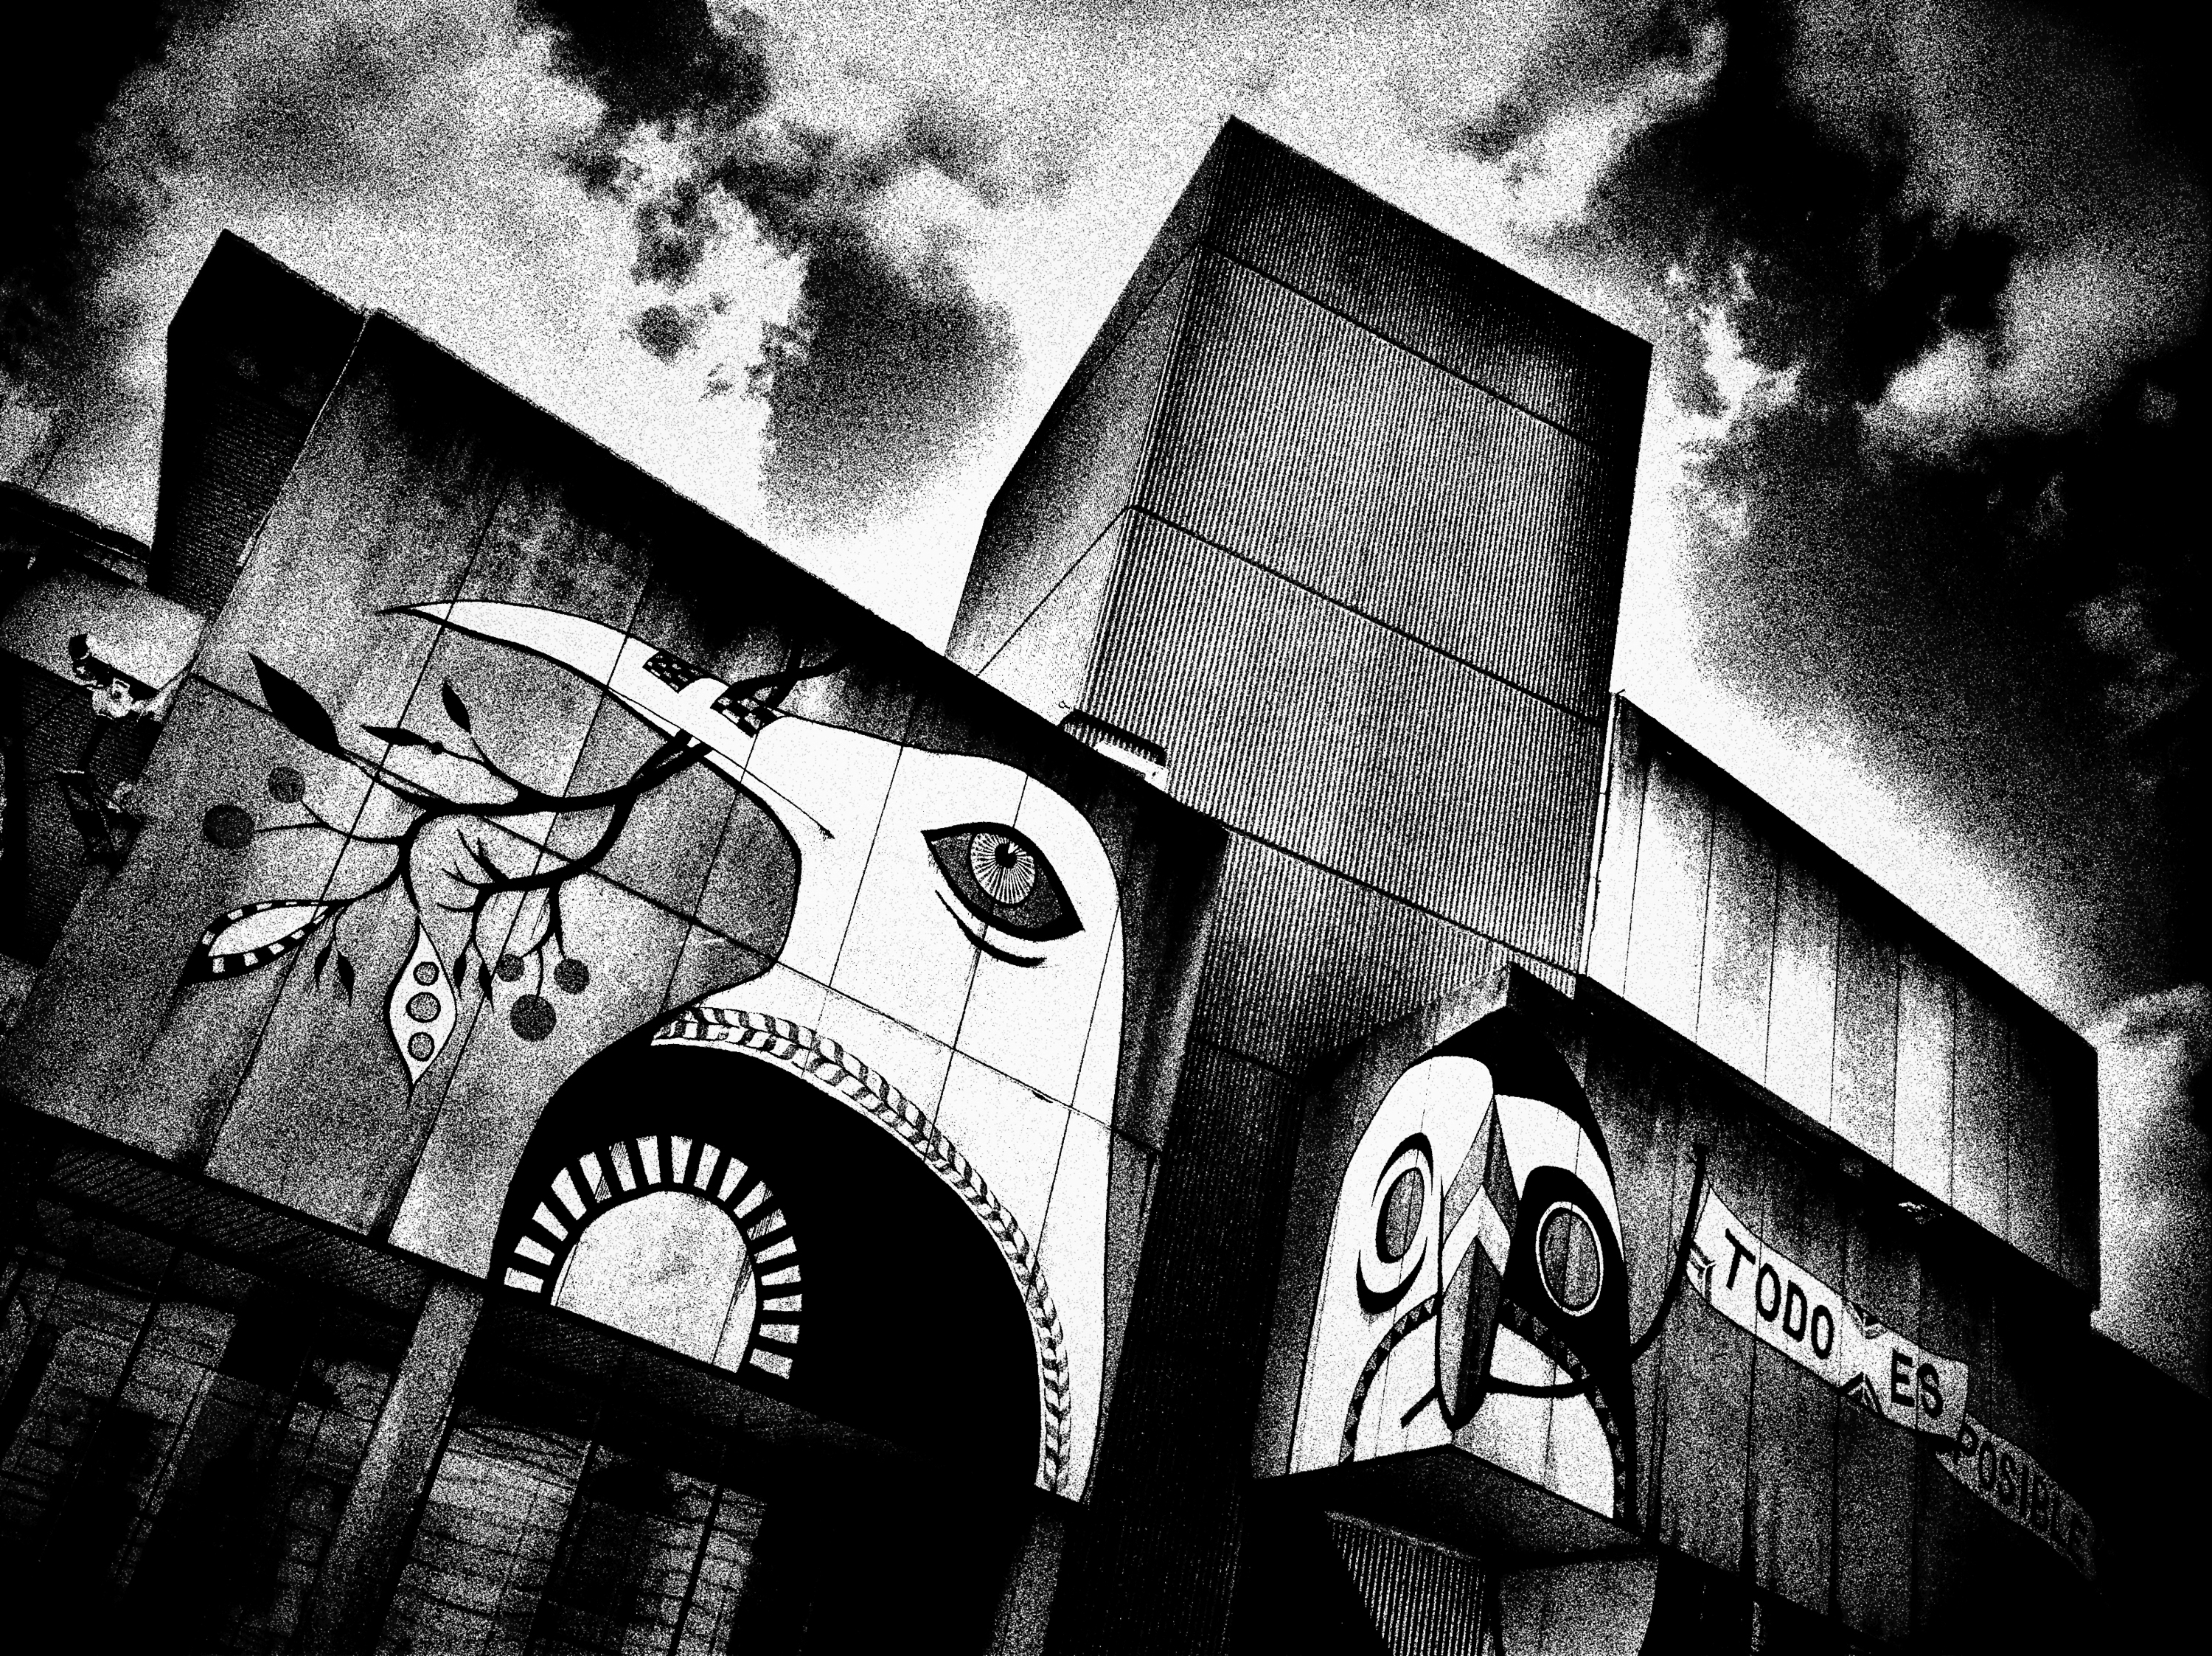 Birmingham Graffiti, Black and white of industrial building with bird graffiti